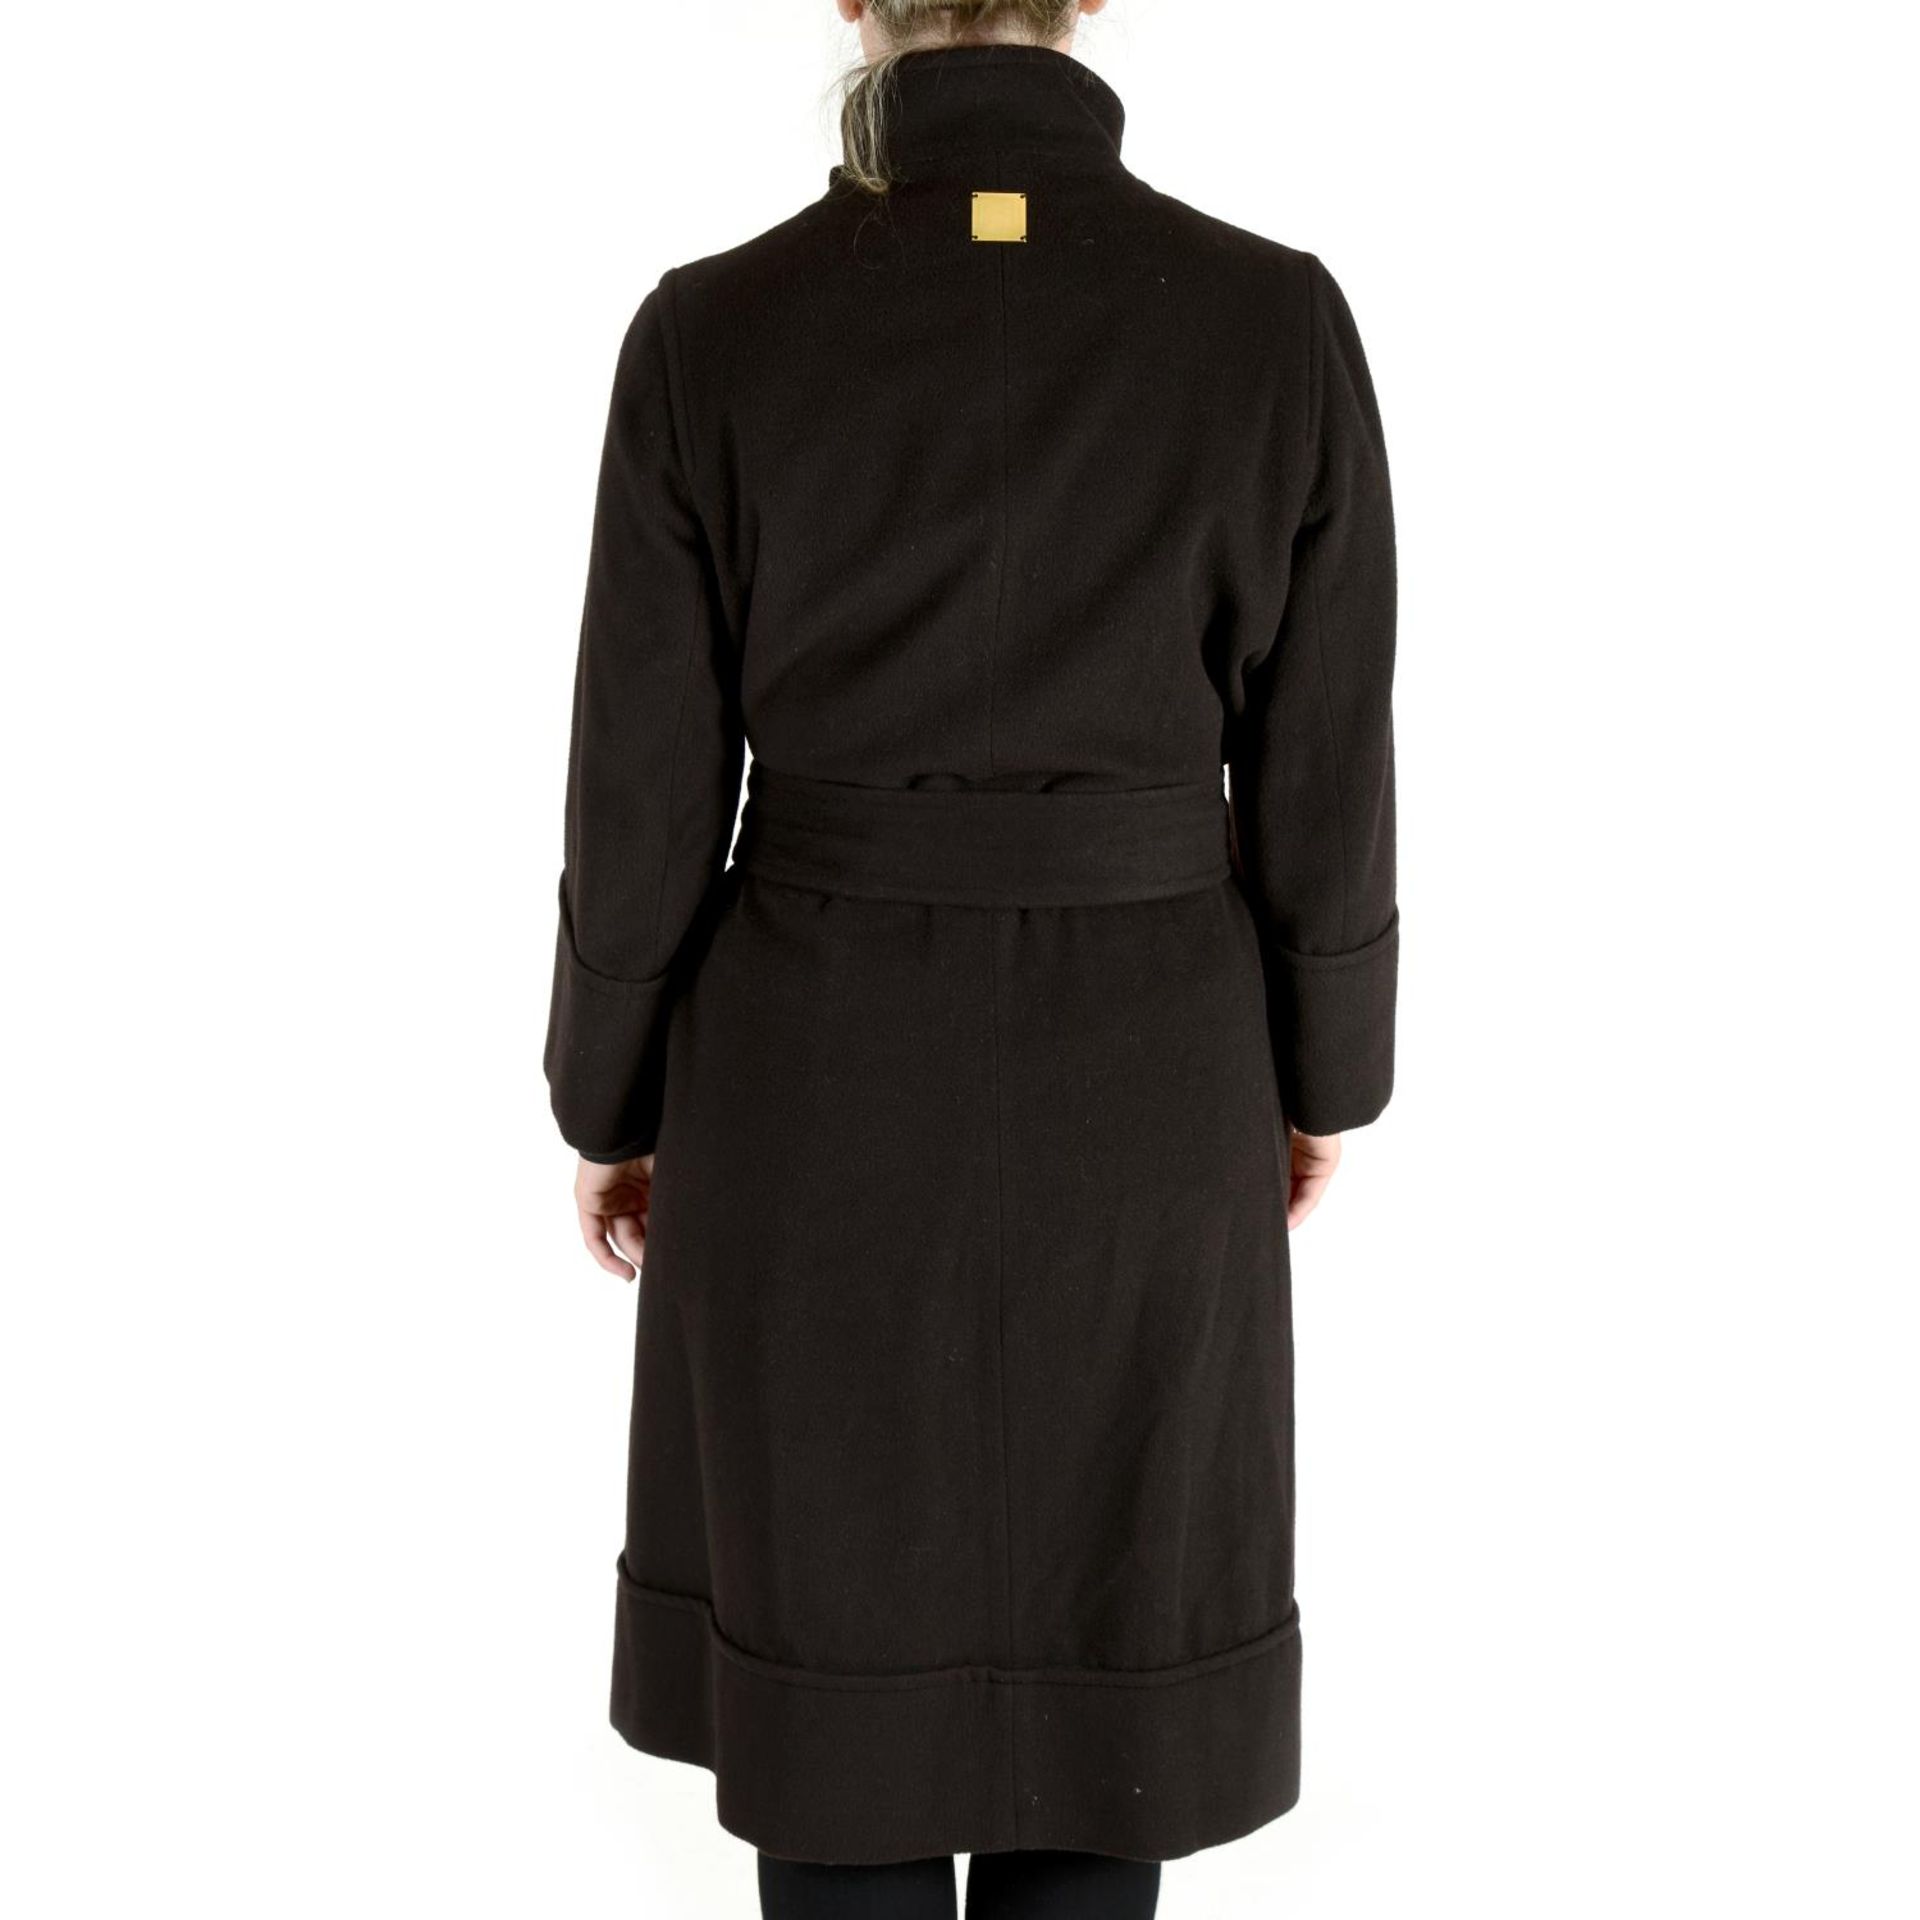 CAROLINA HERRERA - a coat and two jackets. - Image 3 of 6